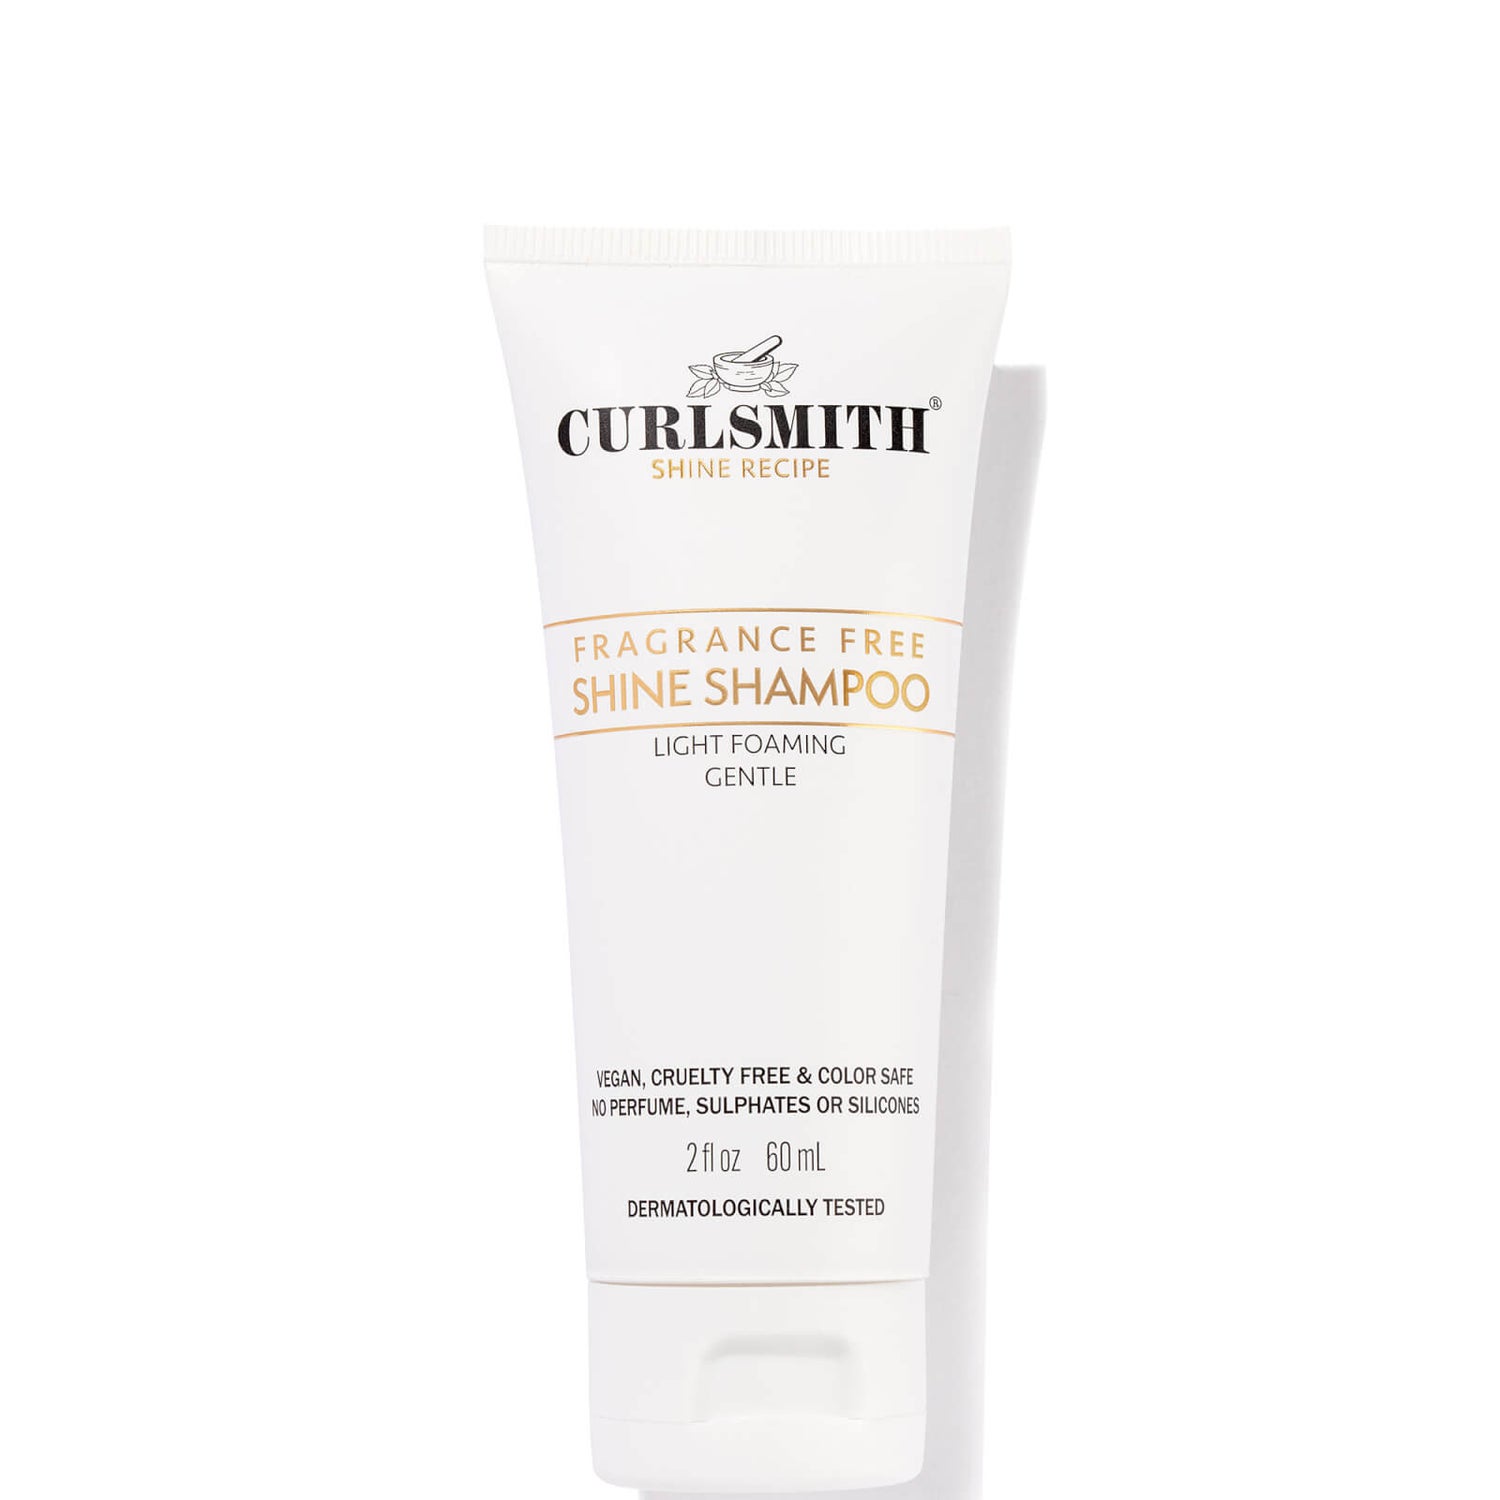 Curlsmith Shine Shampoo Travel Size 2 oz